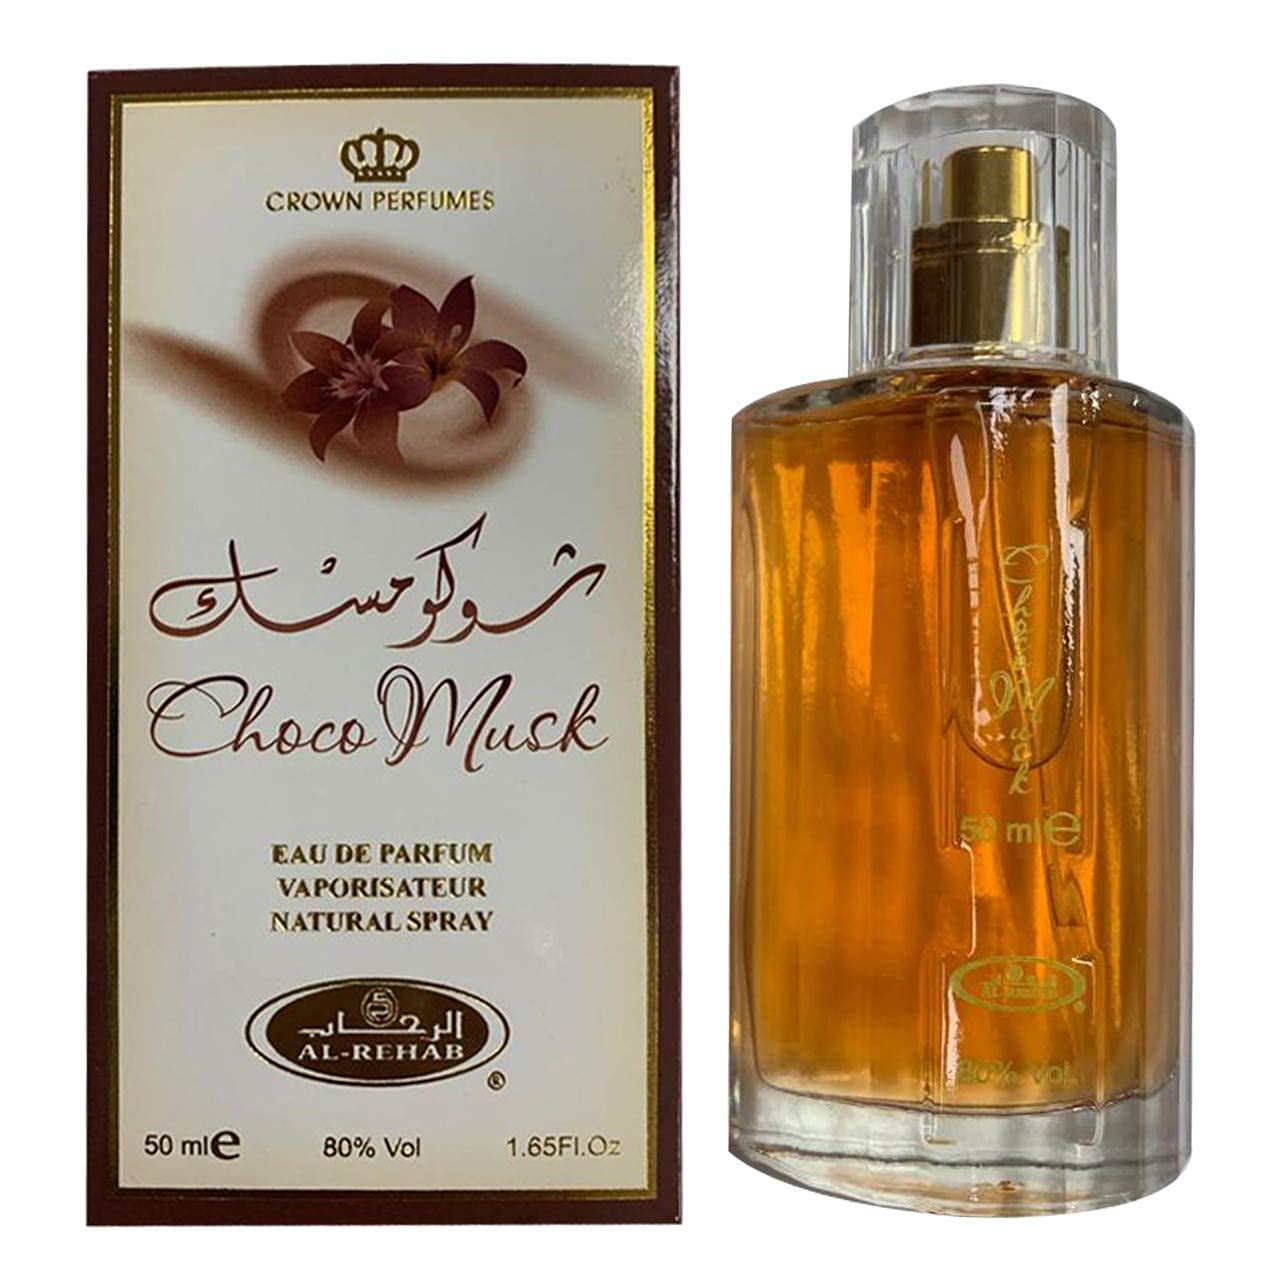 Choco Musk - Eau De Parfum 50ml - Unisex